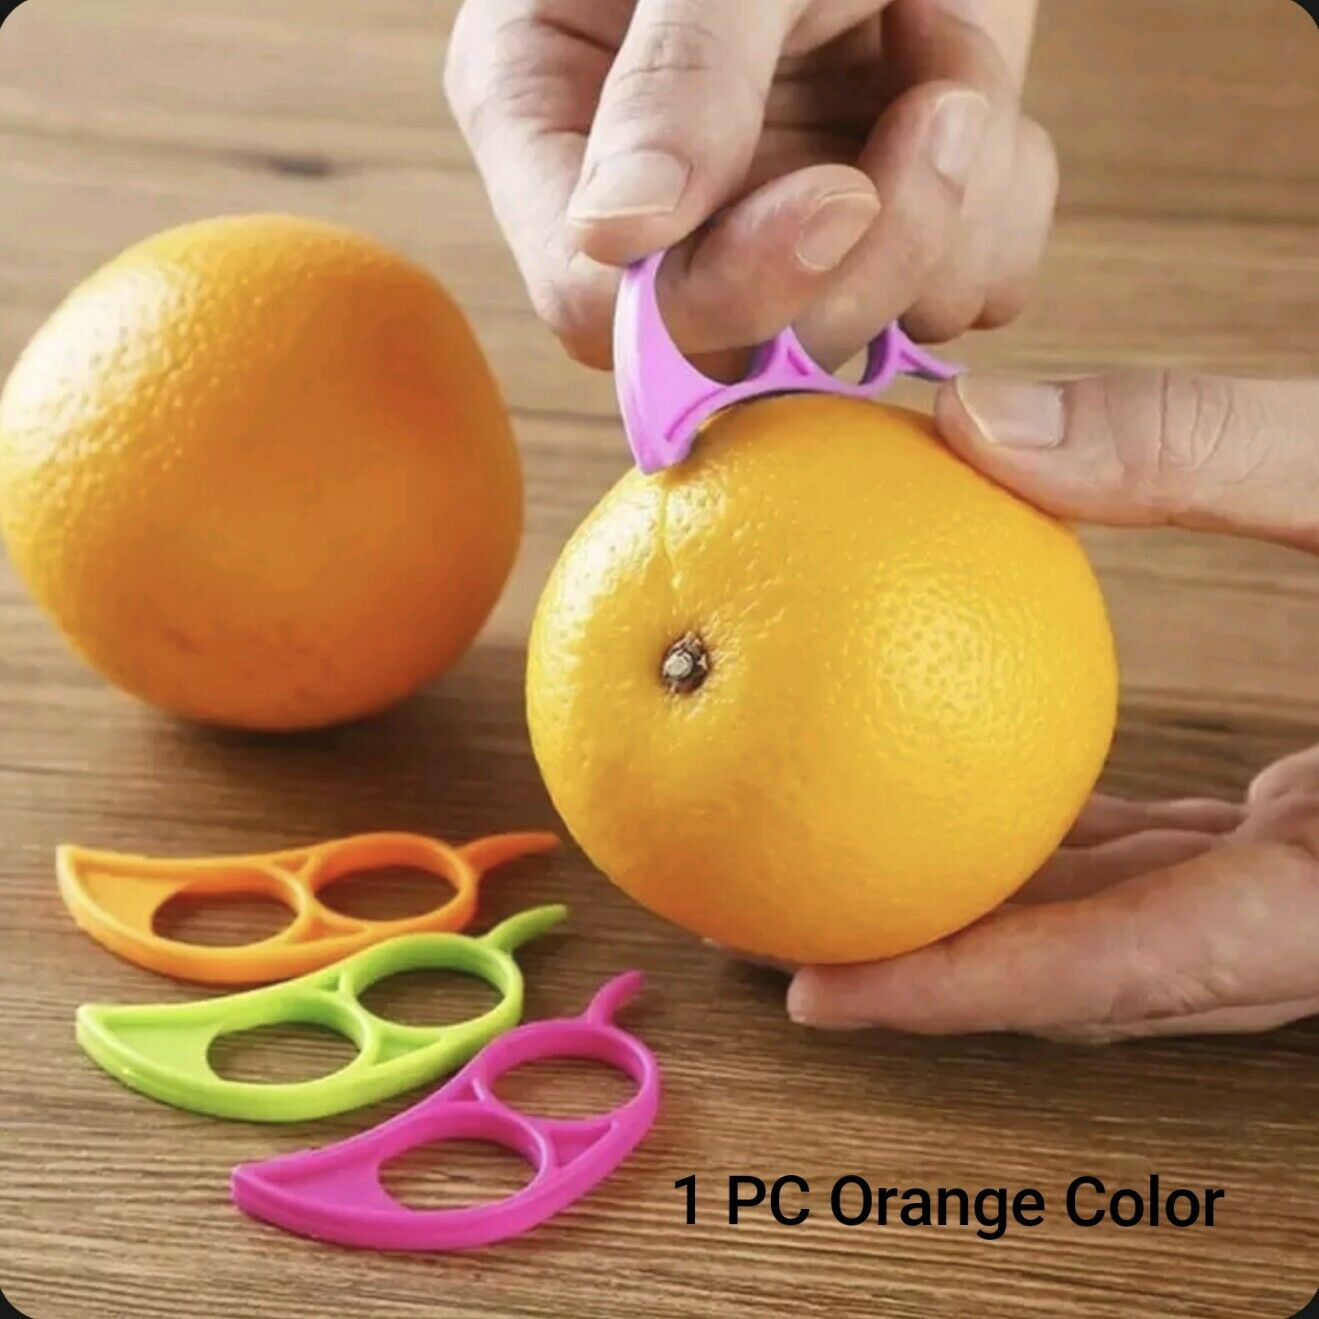 1Pcs Orange Peeler Mini Plastic Creative Lemon Fruit Stripper Easy Opener Citrus